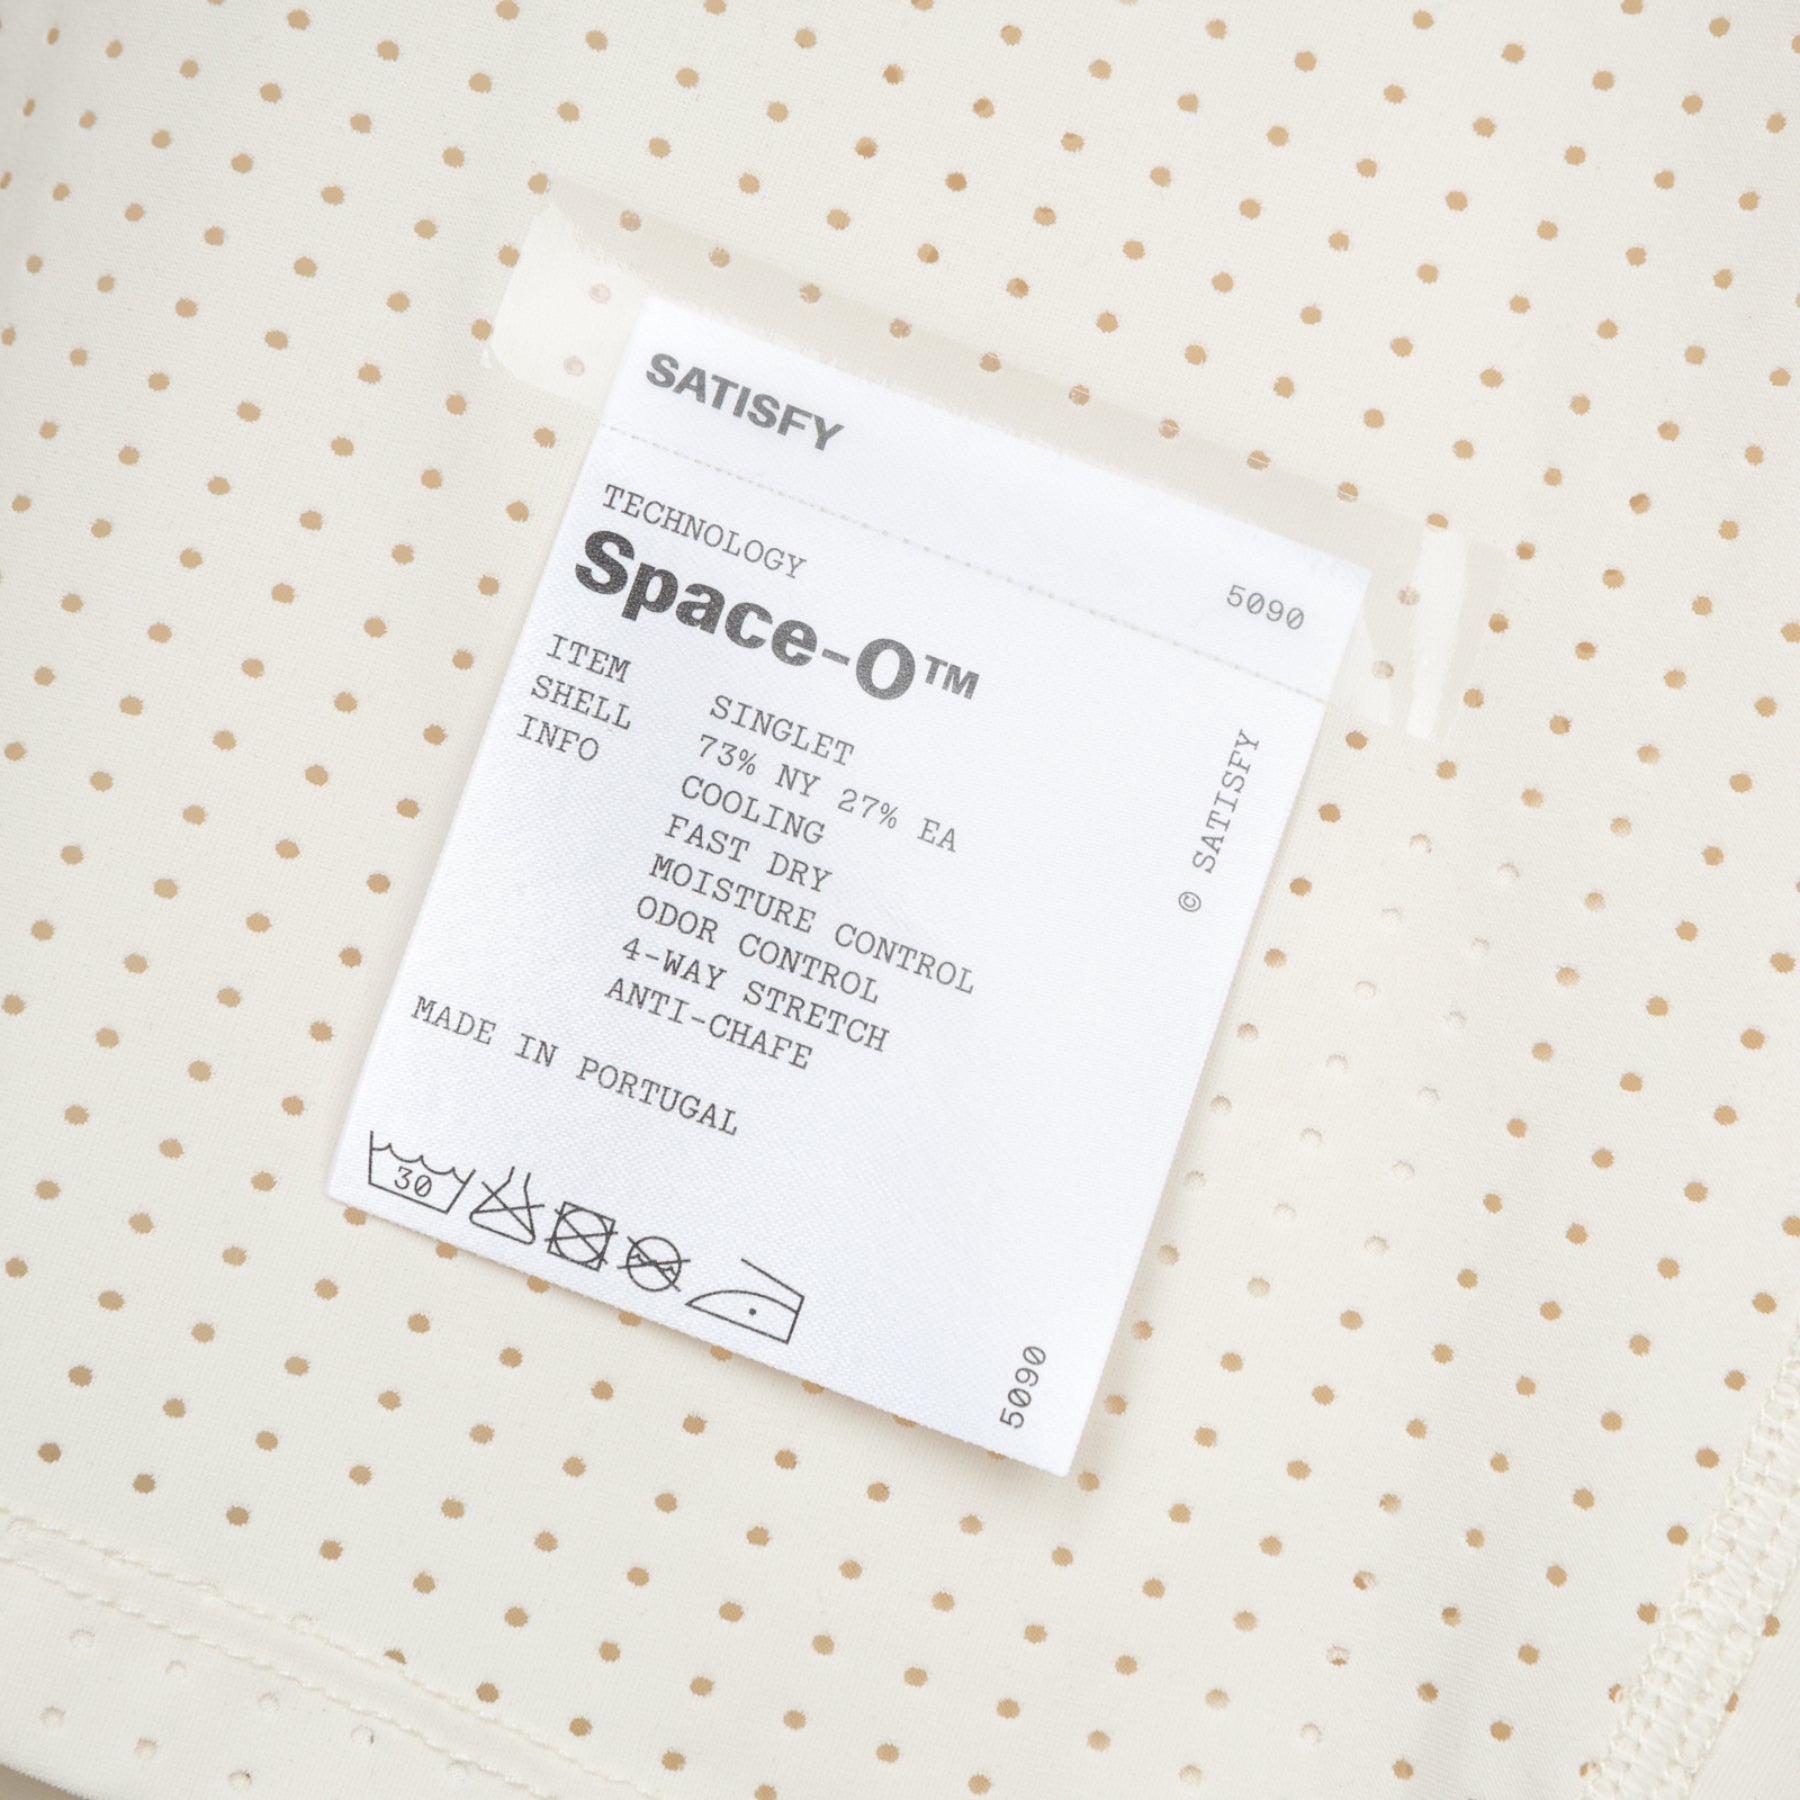 Space-O™ Singlet - Chalk